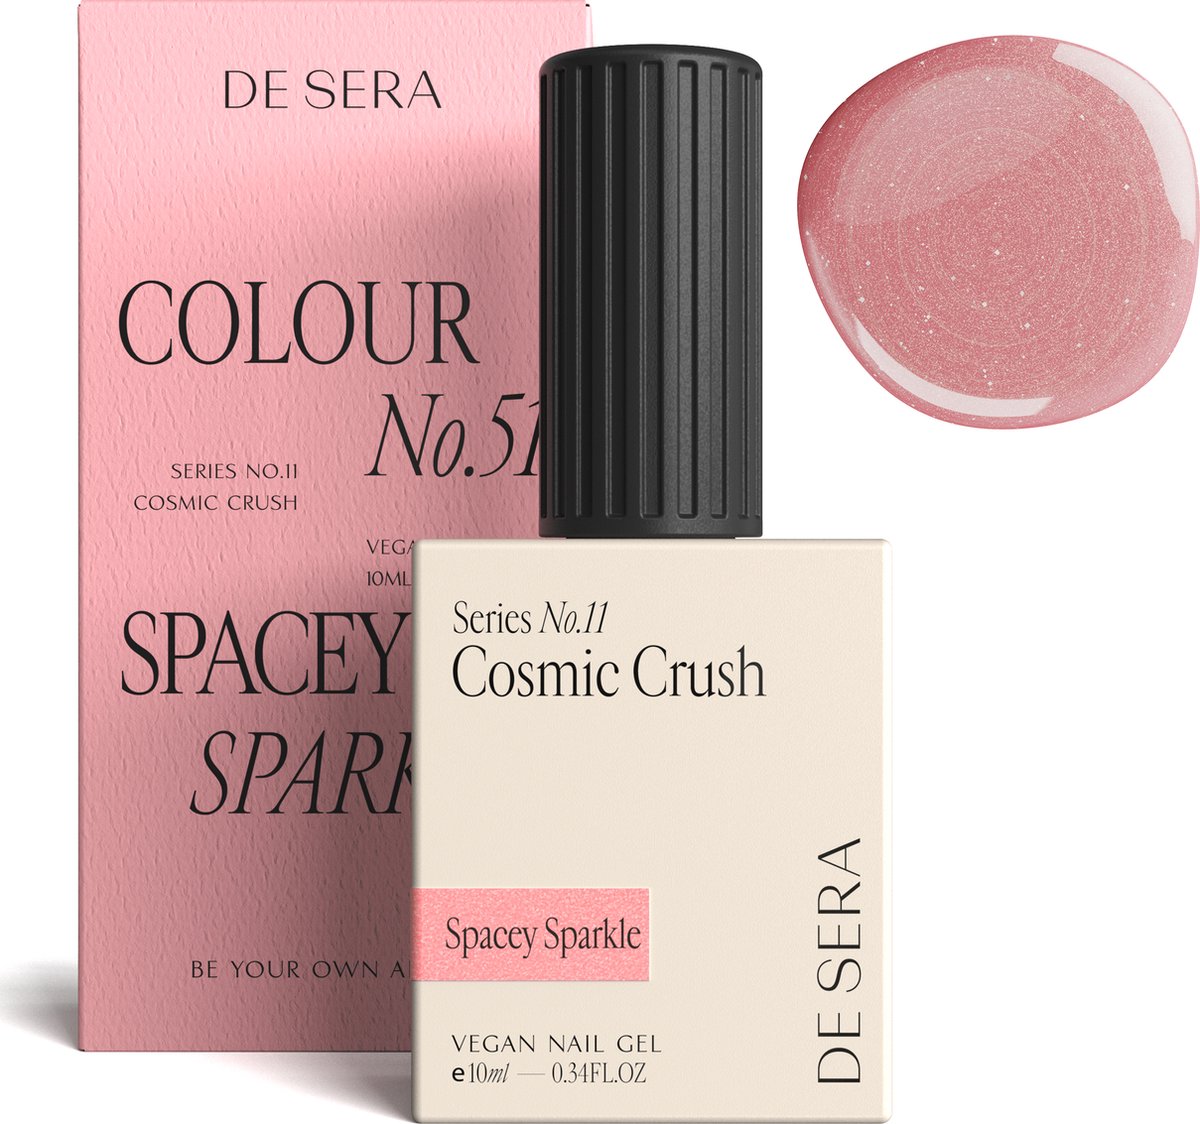 De Sera Gellak - Glitter Roze Gel Nagellak - 10ML - Colour No. 51 Spacey Sparkle